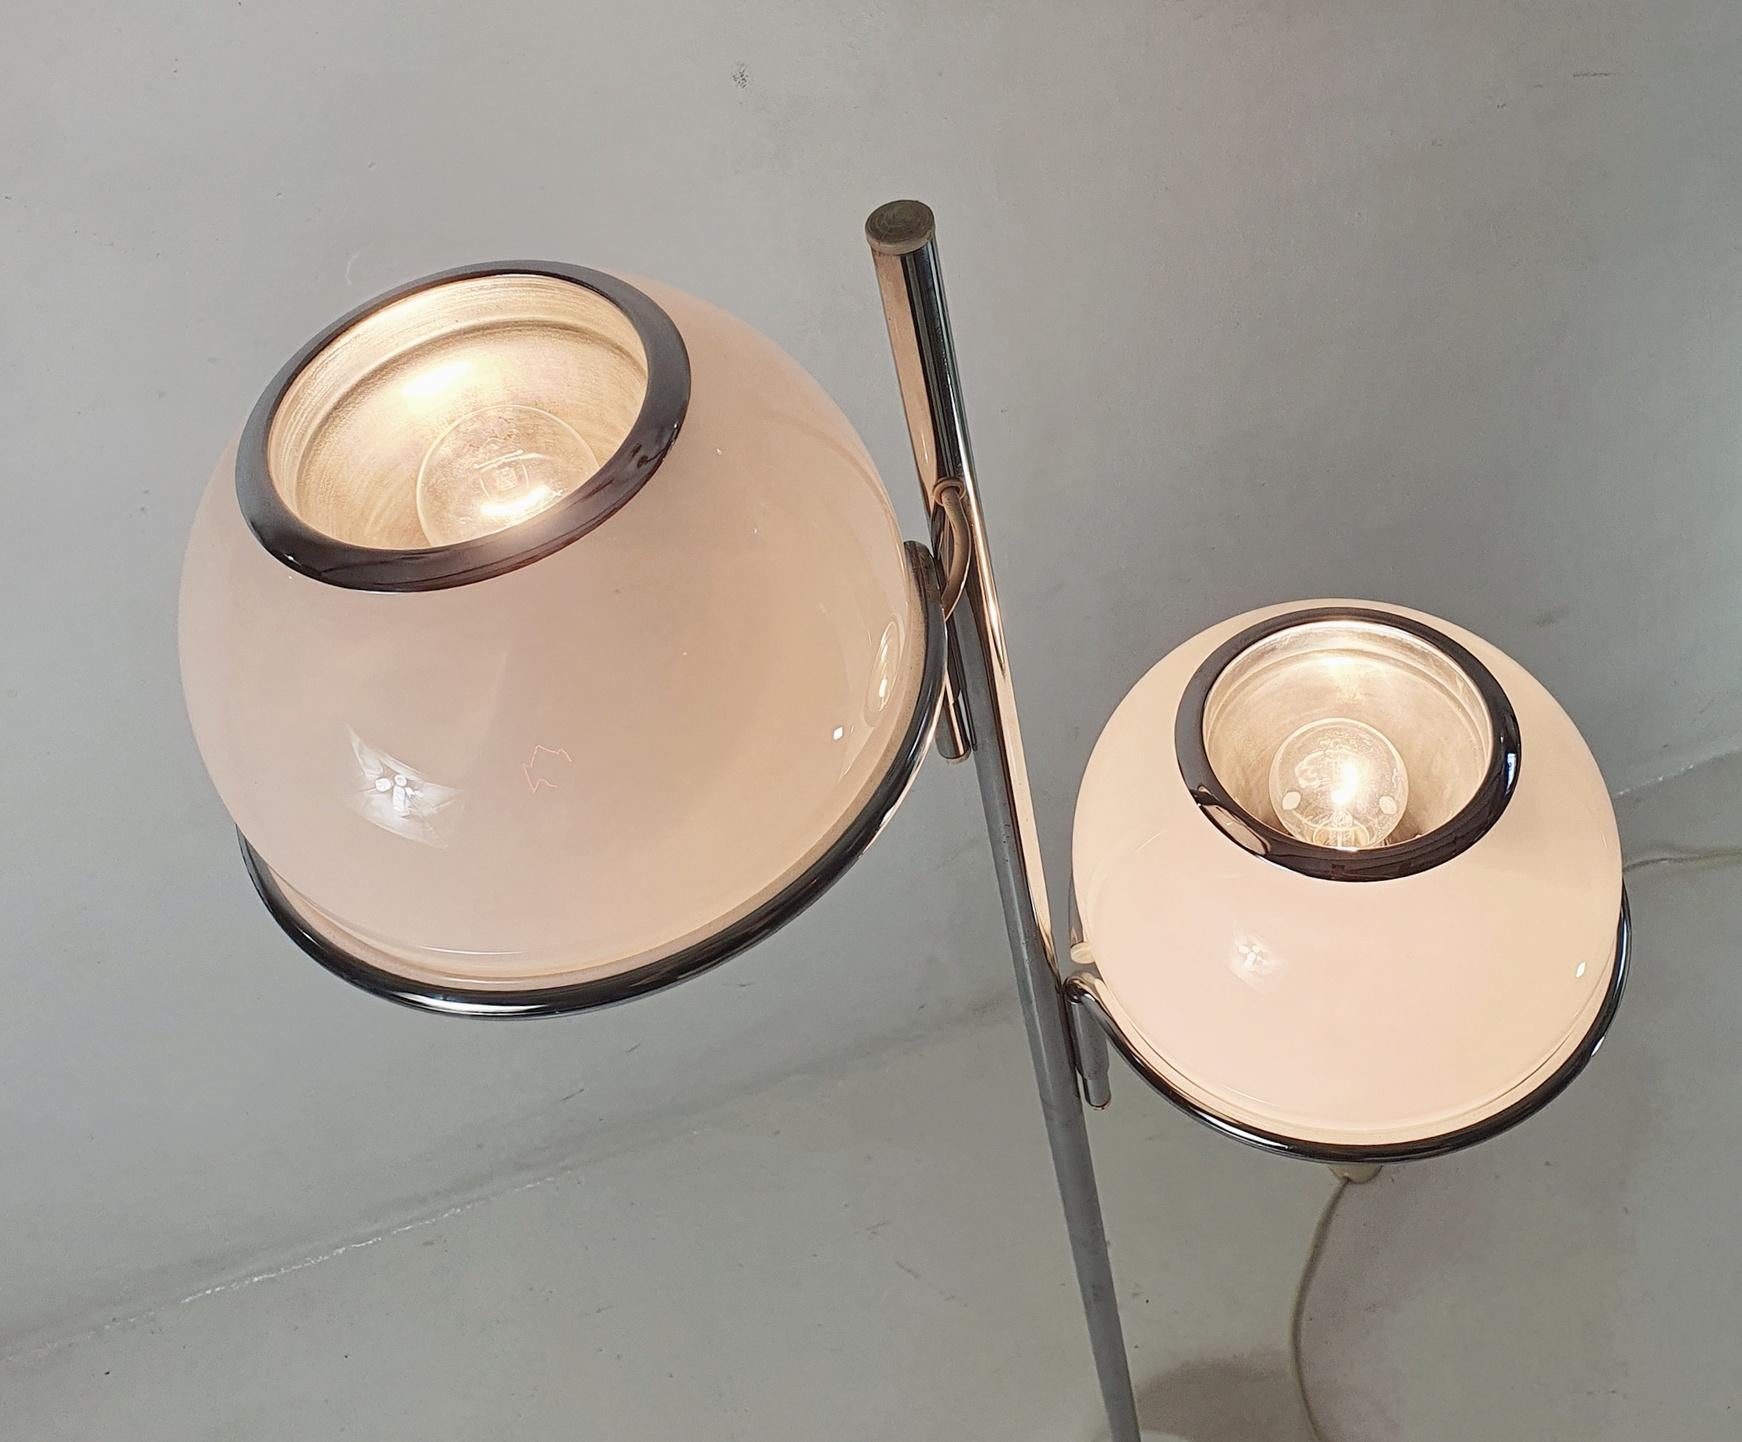 Mid-Century Modern Floor Lamp Model 1094 by Gino Sarfatti Italy 1969 For Sale